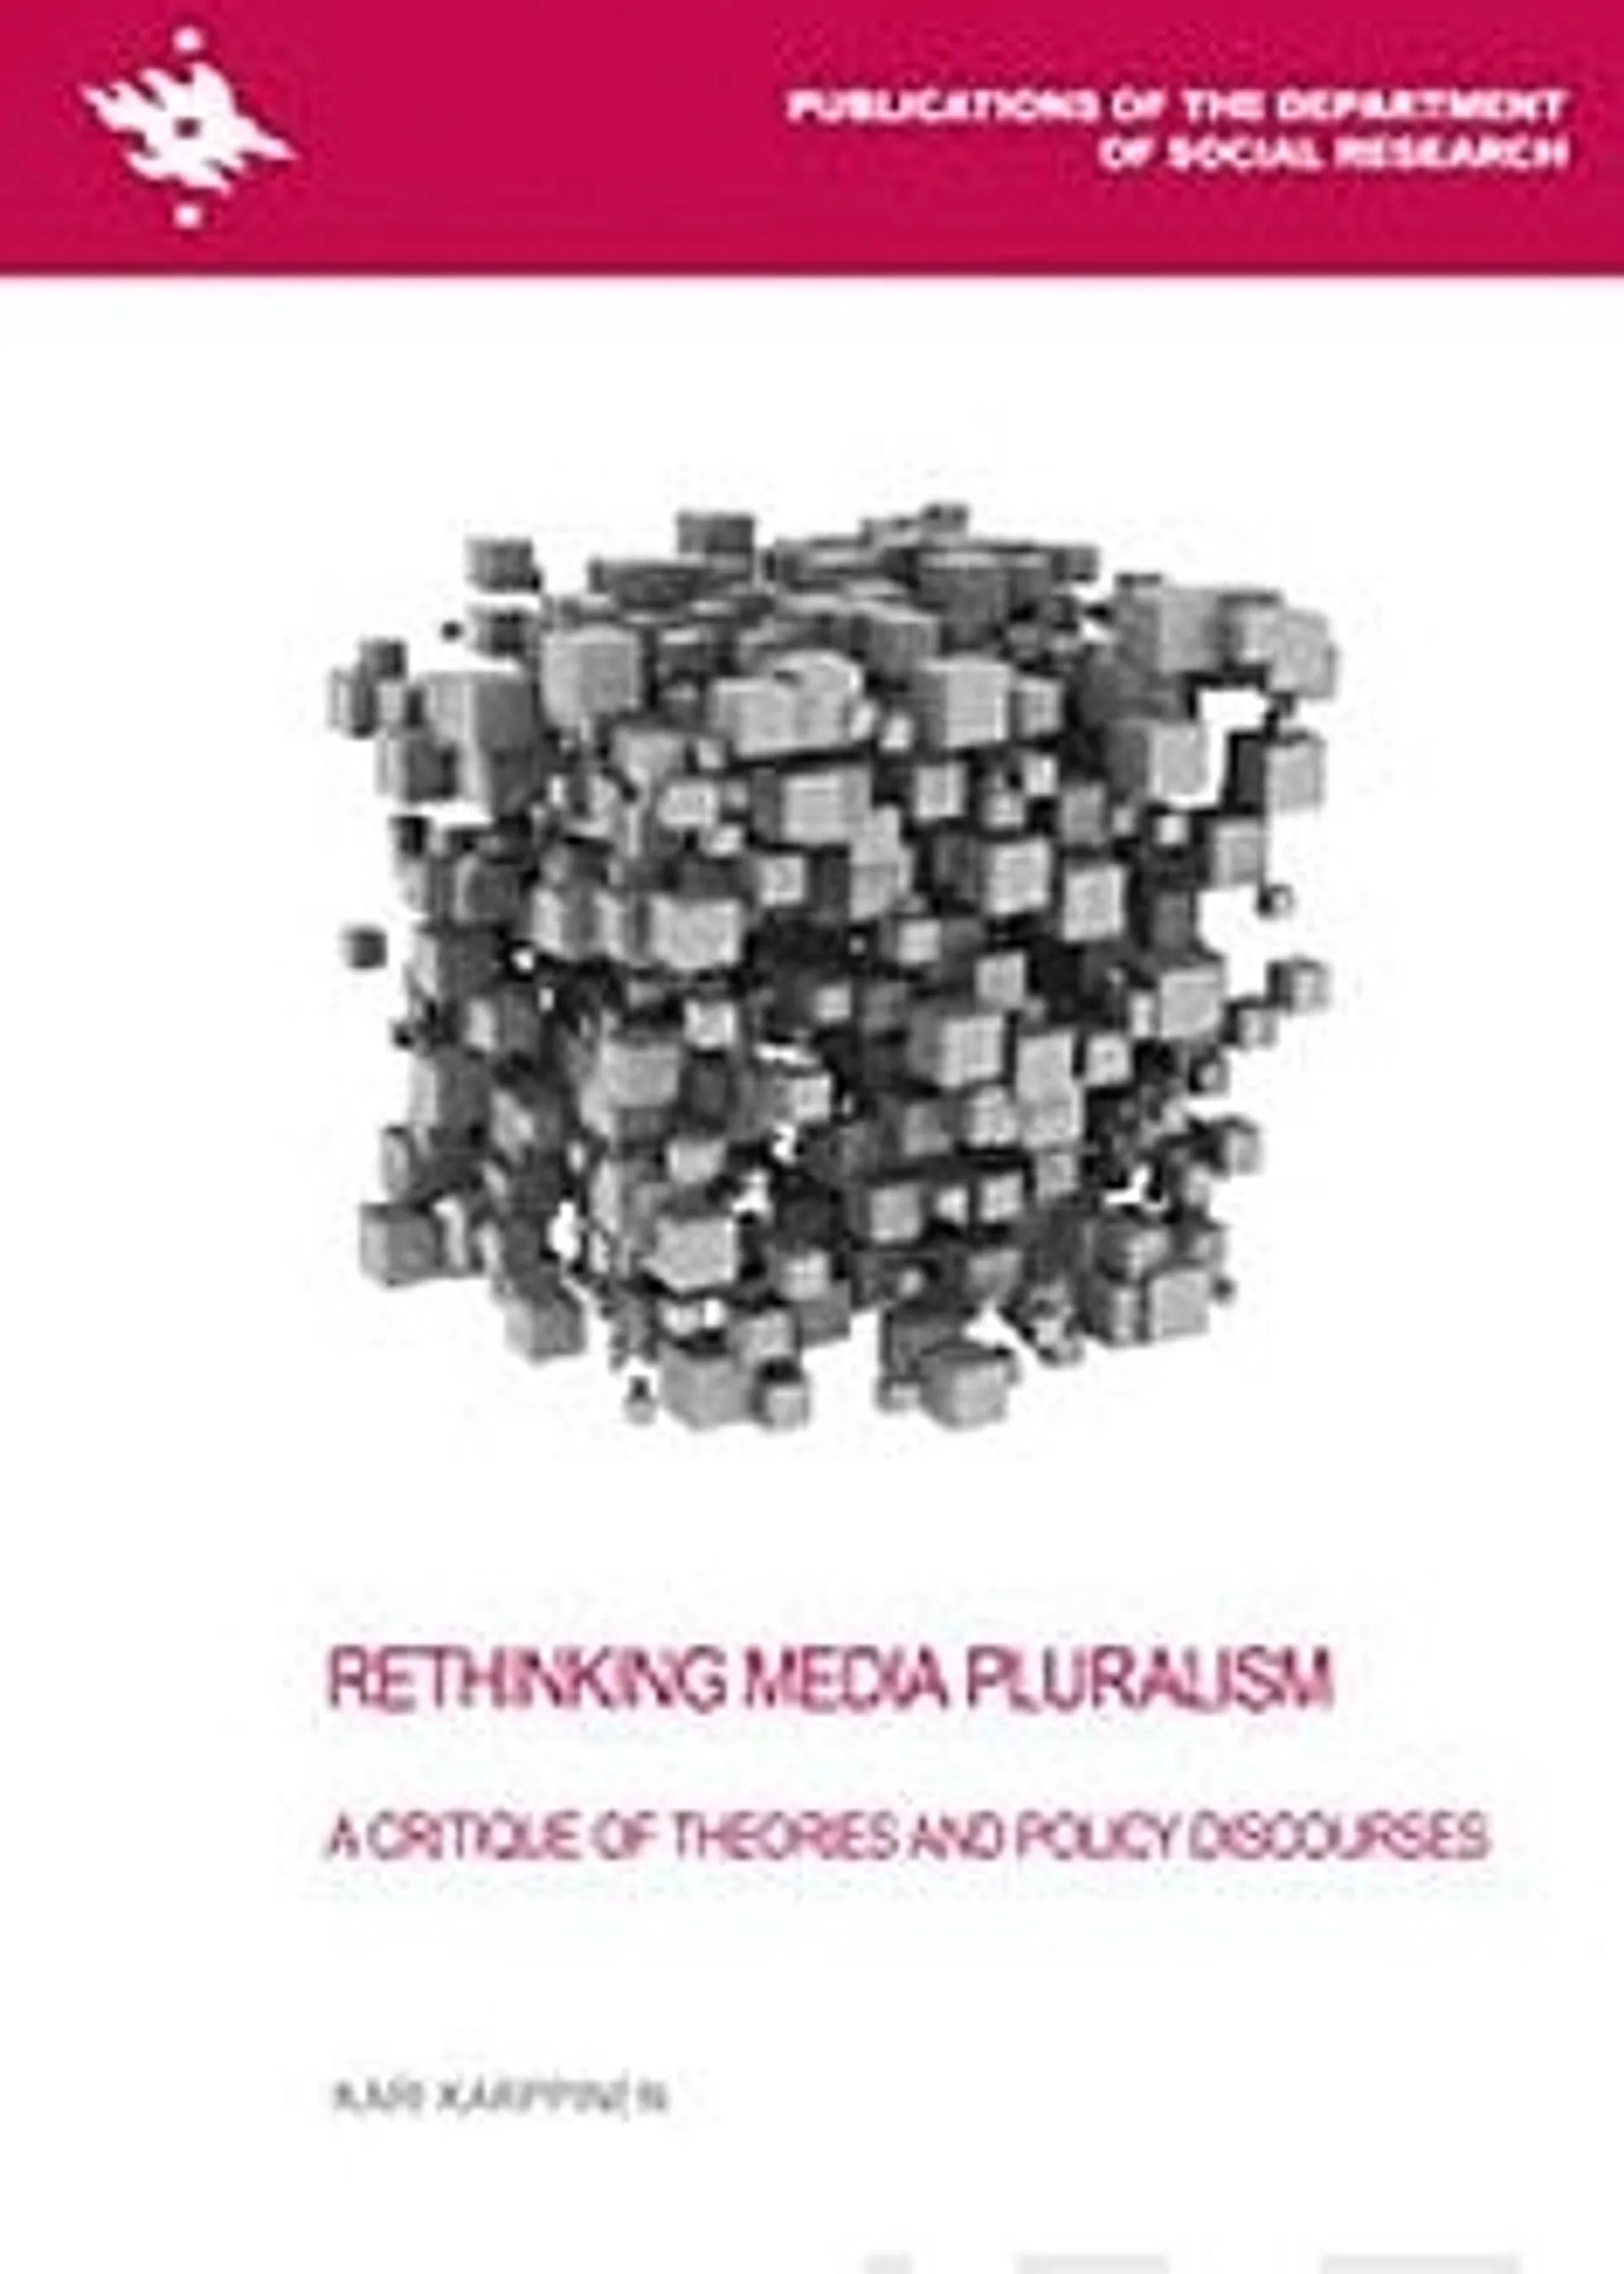 Karppinen, Rethinking Media Pluralism